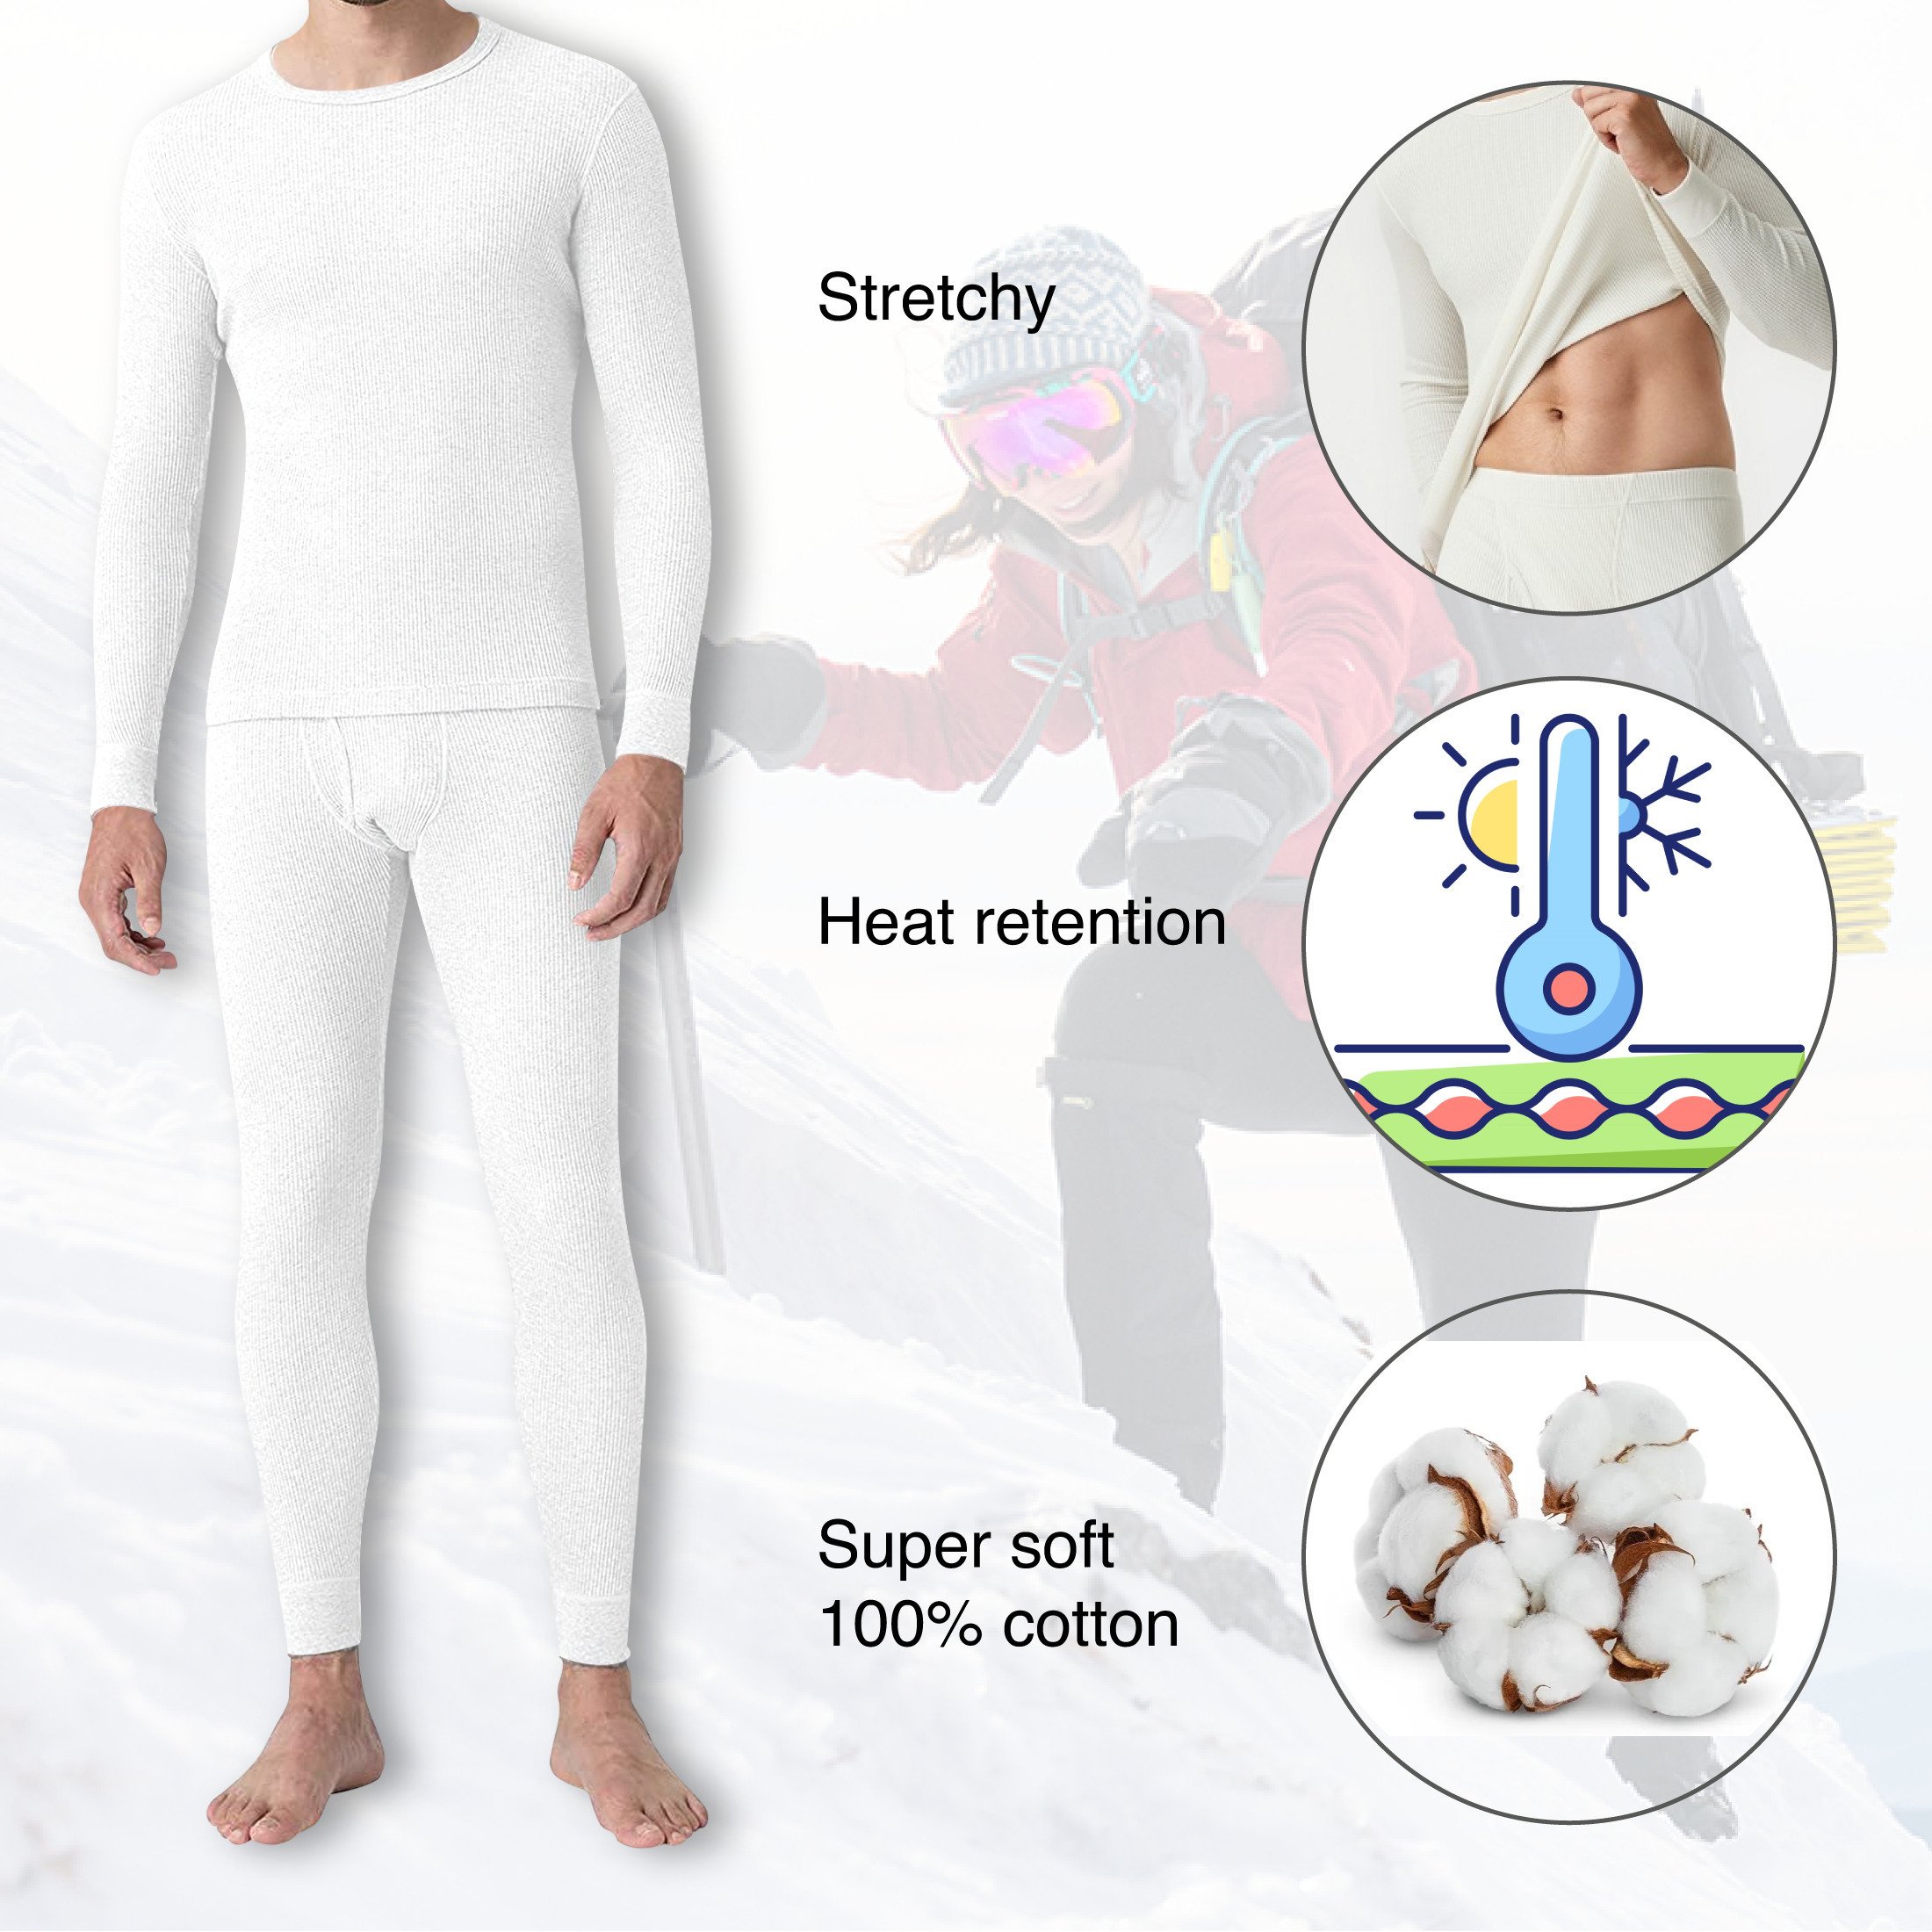 2-Sets: Men's Super Soft Cotton Waffle Knit Winter Thermal Underwear Set - White & White, 2X-Large